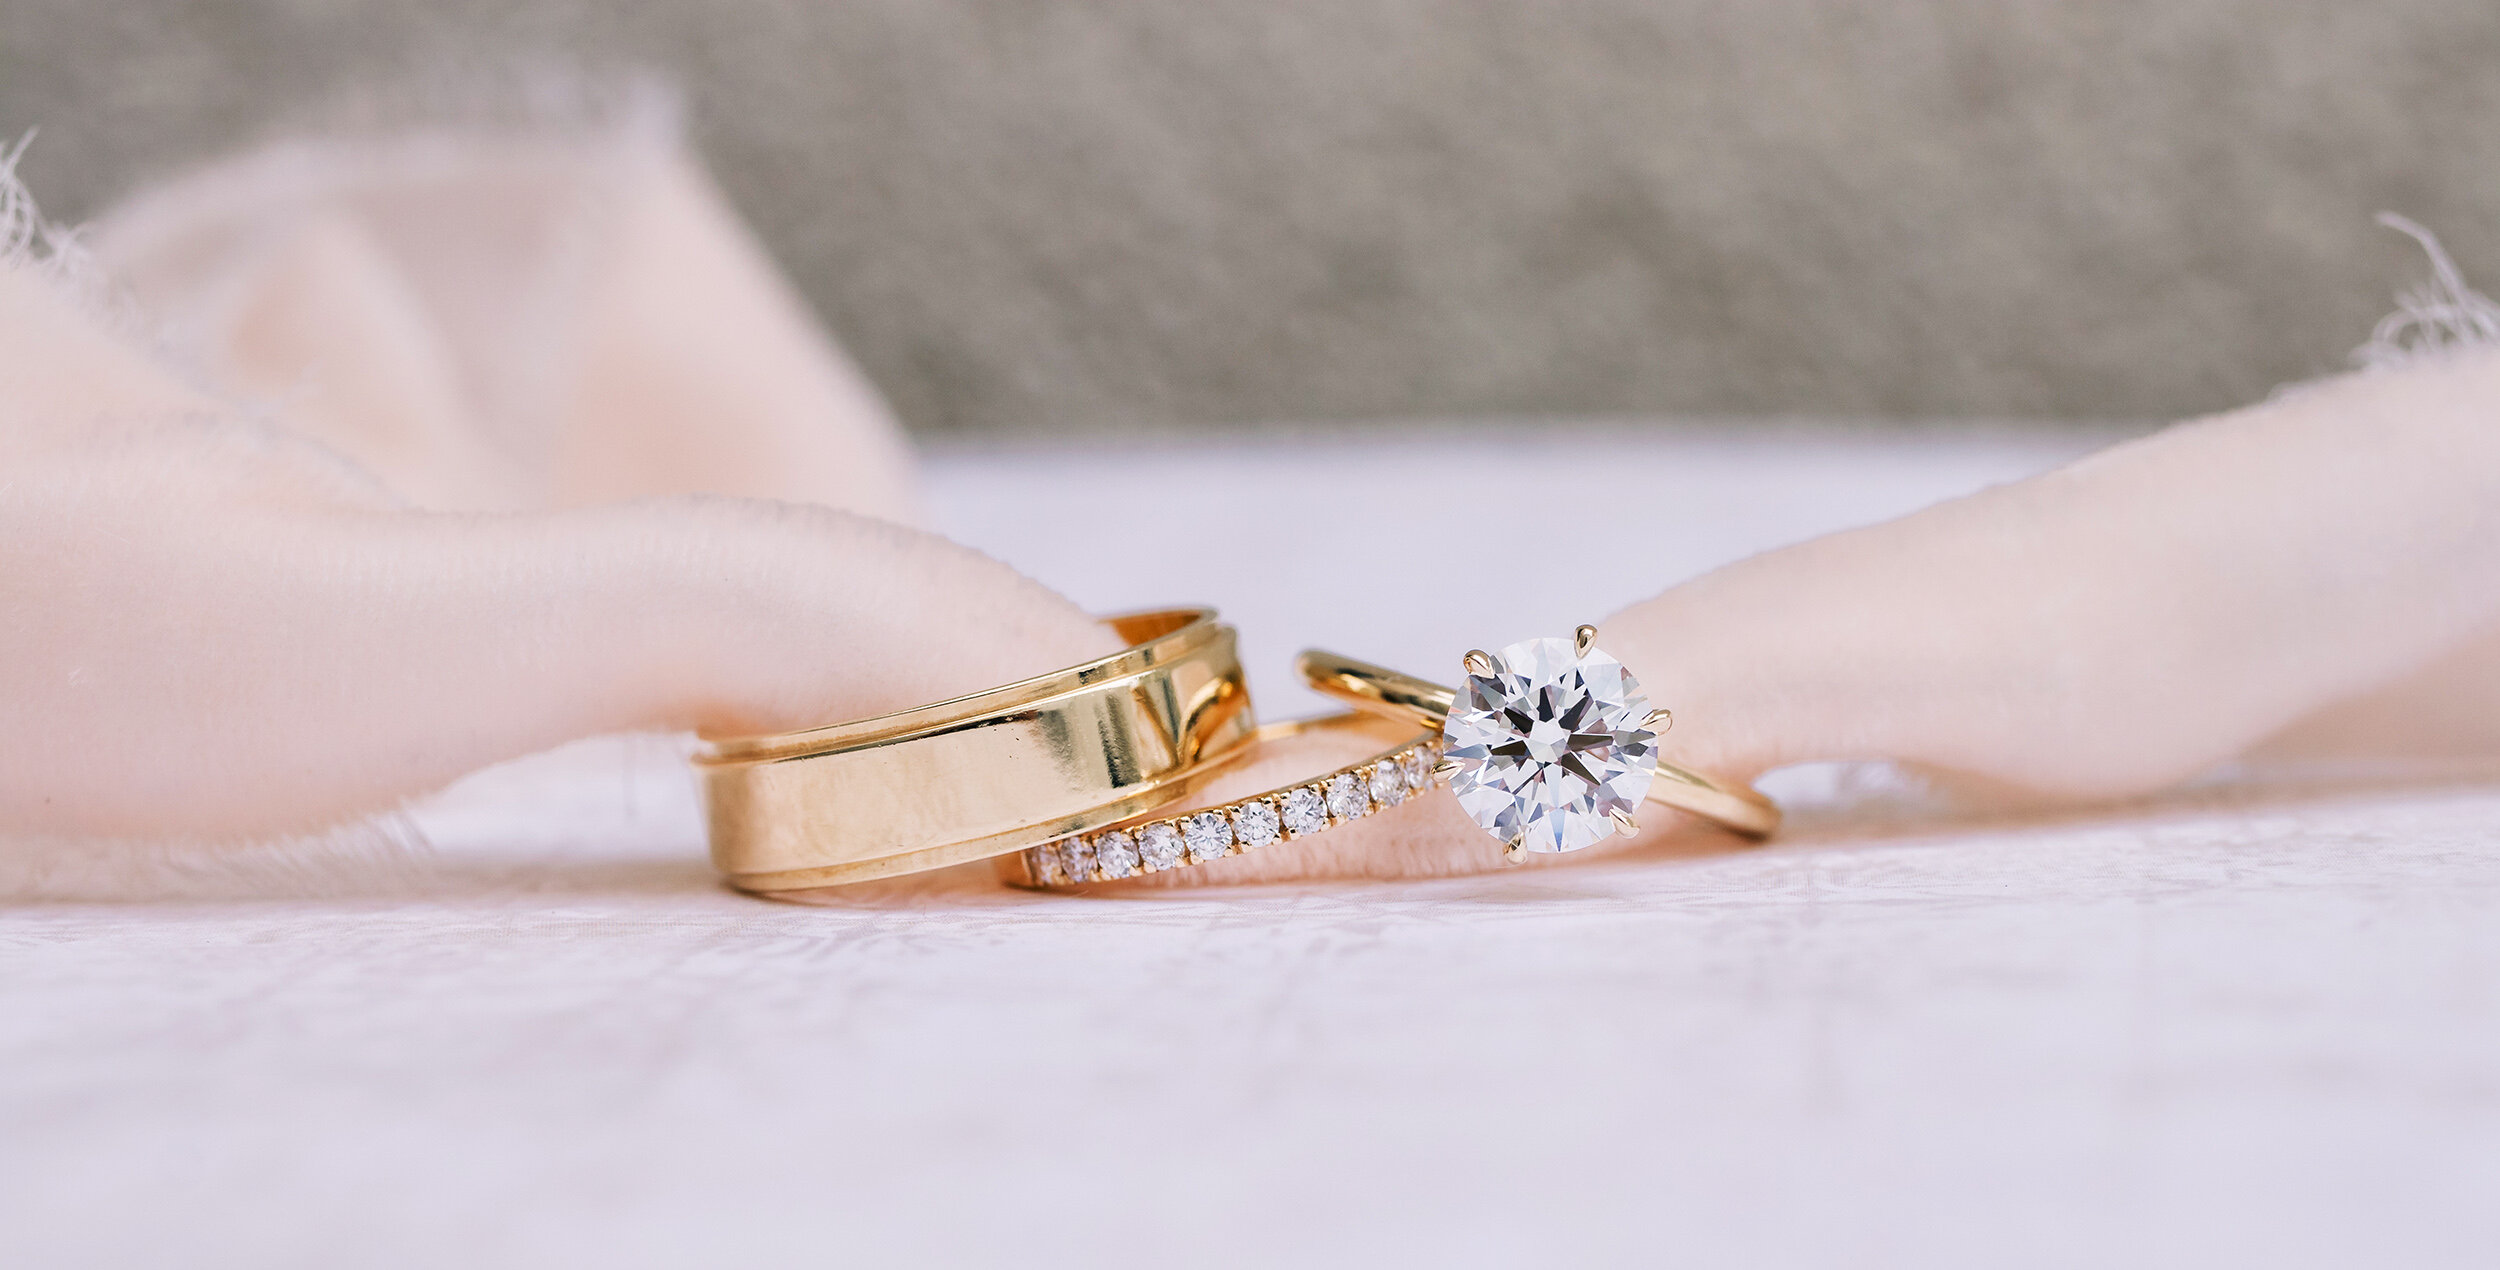 Buy Latest Wedding Ring Online